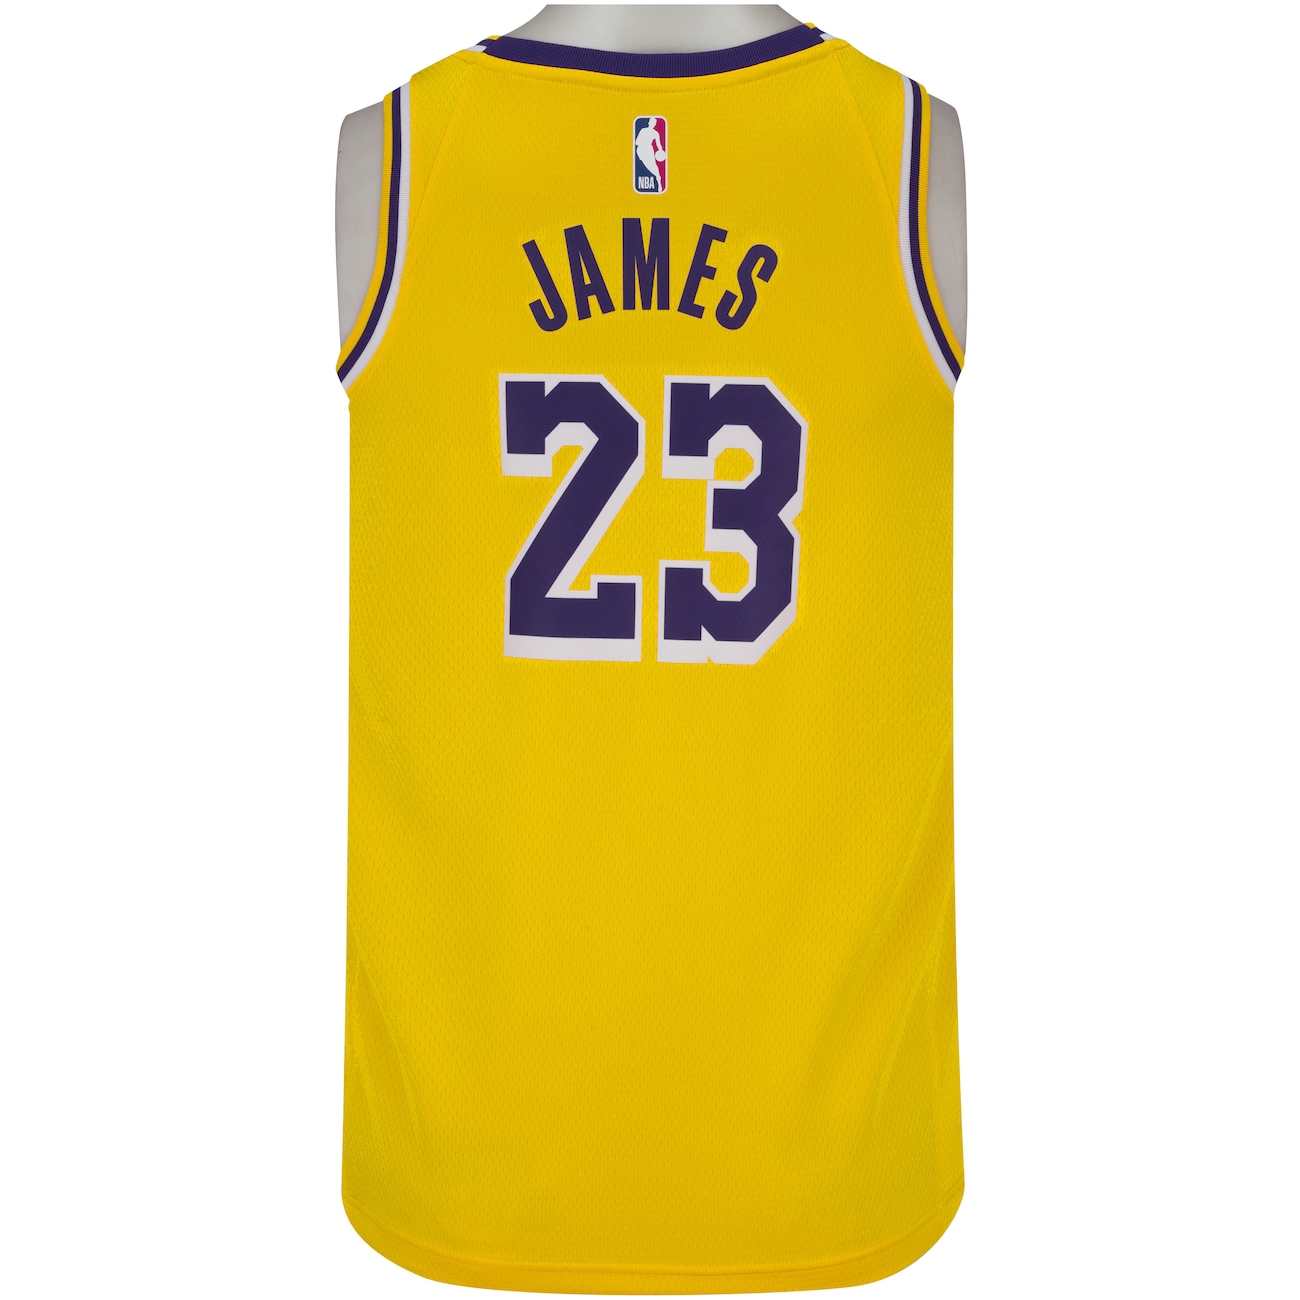 Camiseta Regata Los Angeles Lakers Lebron James Nike